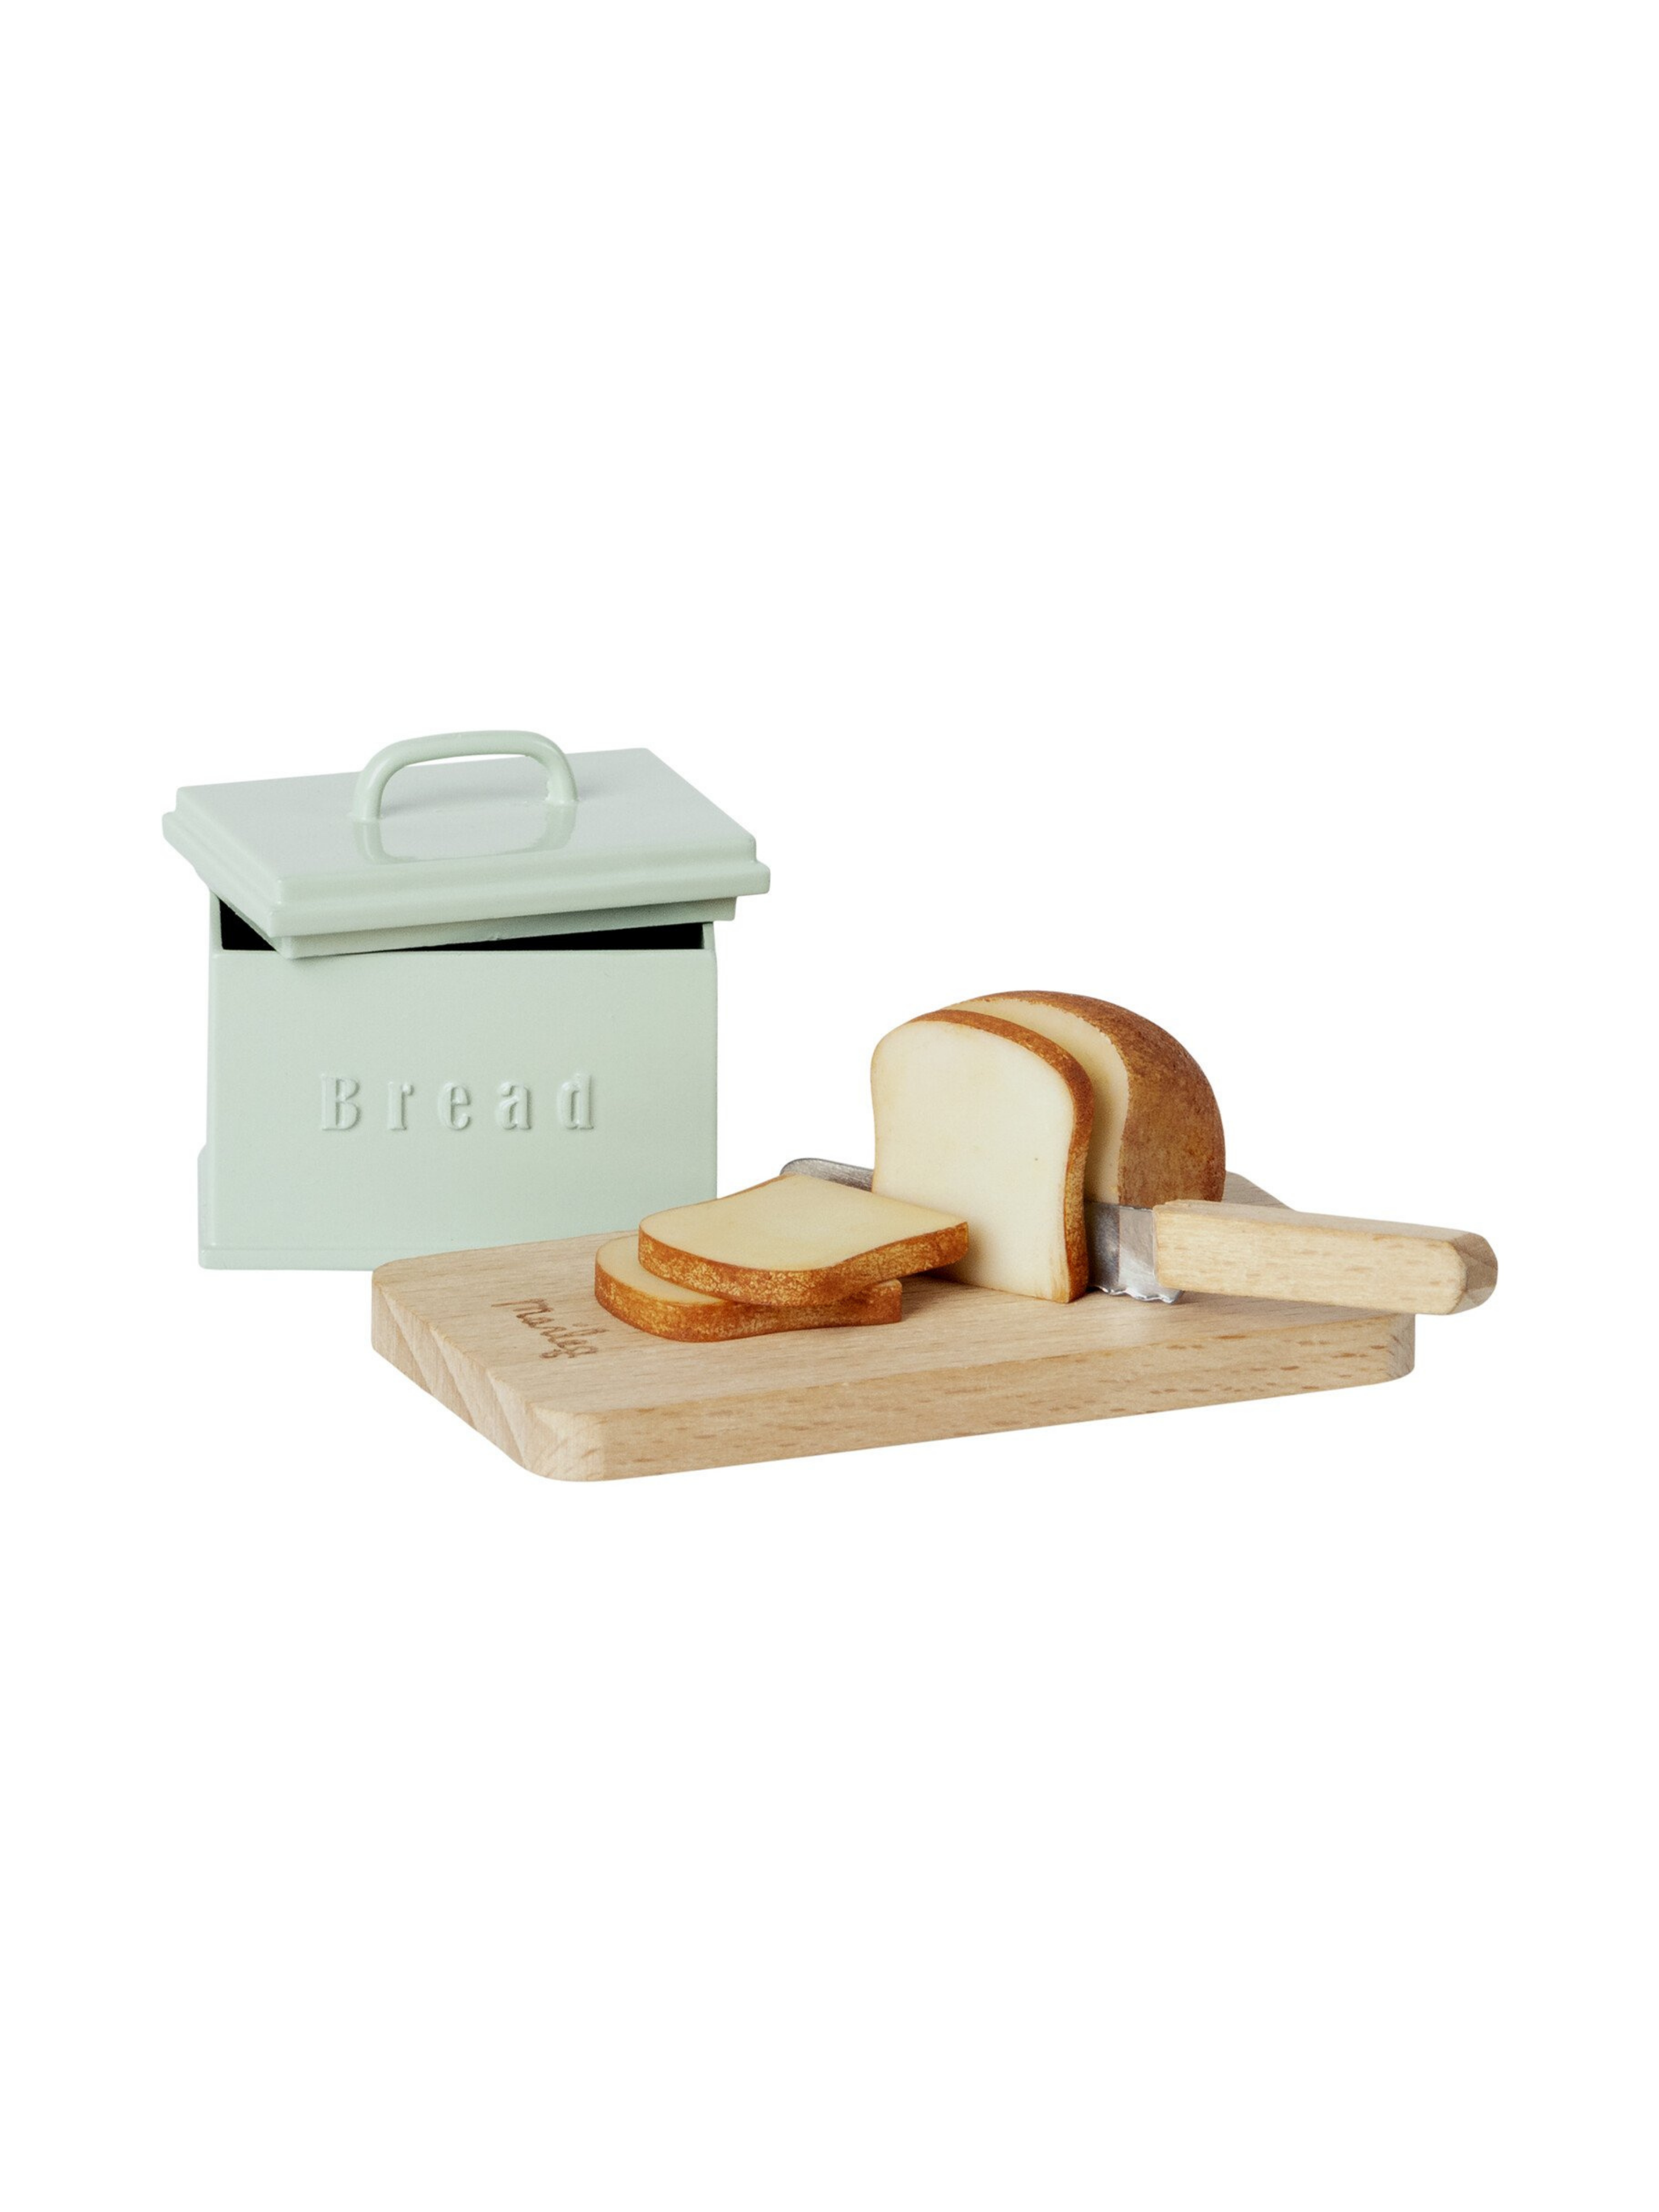 Miniature Bread Box with Utensils: Charming Kitchen Decor